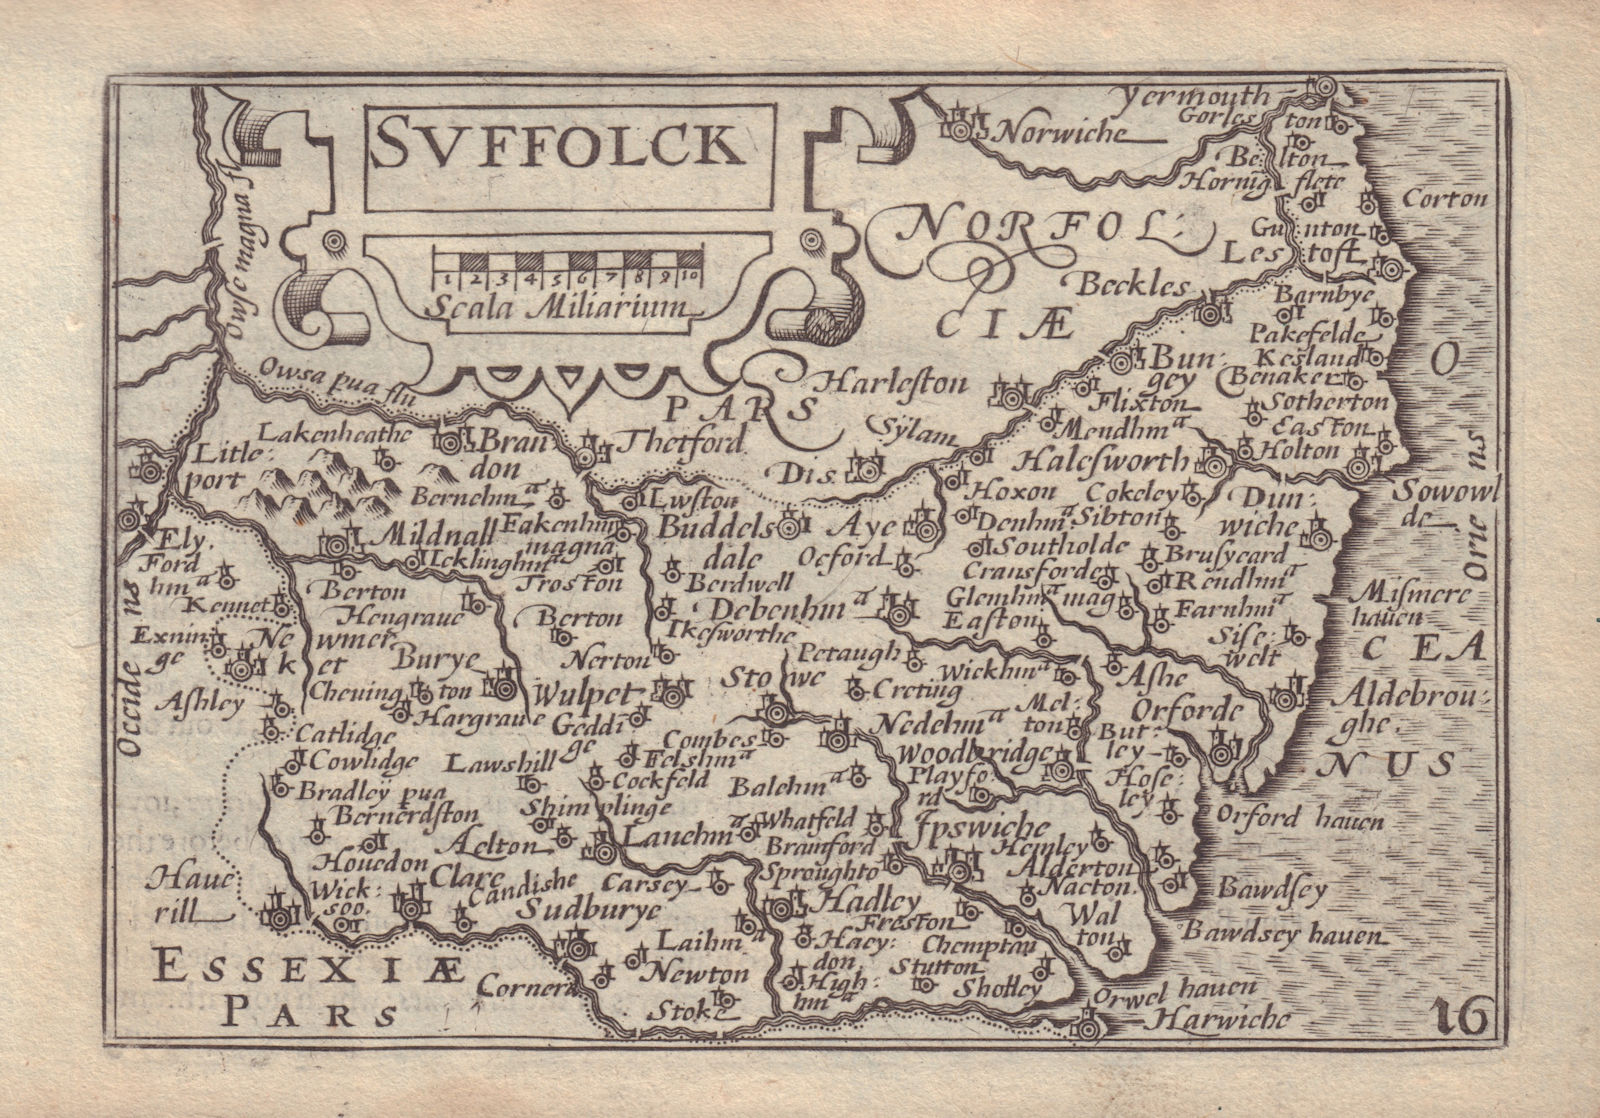 Associate Product Suffolck by van den Keere. "Speed miniature" Suffolk county map 1632 old